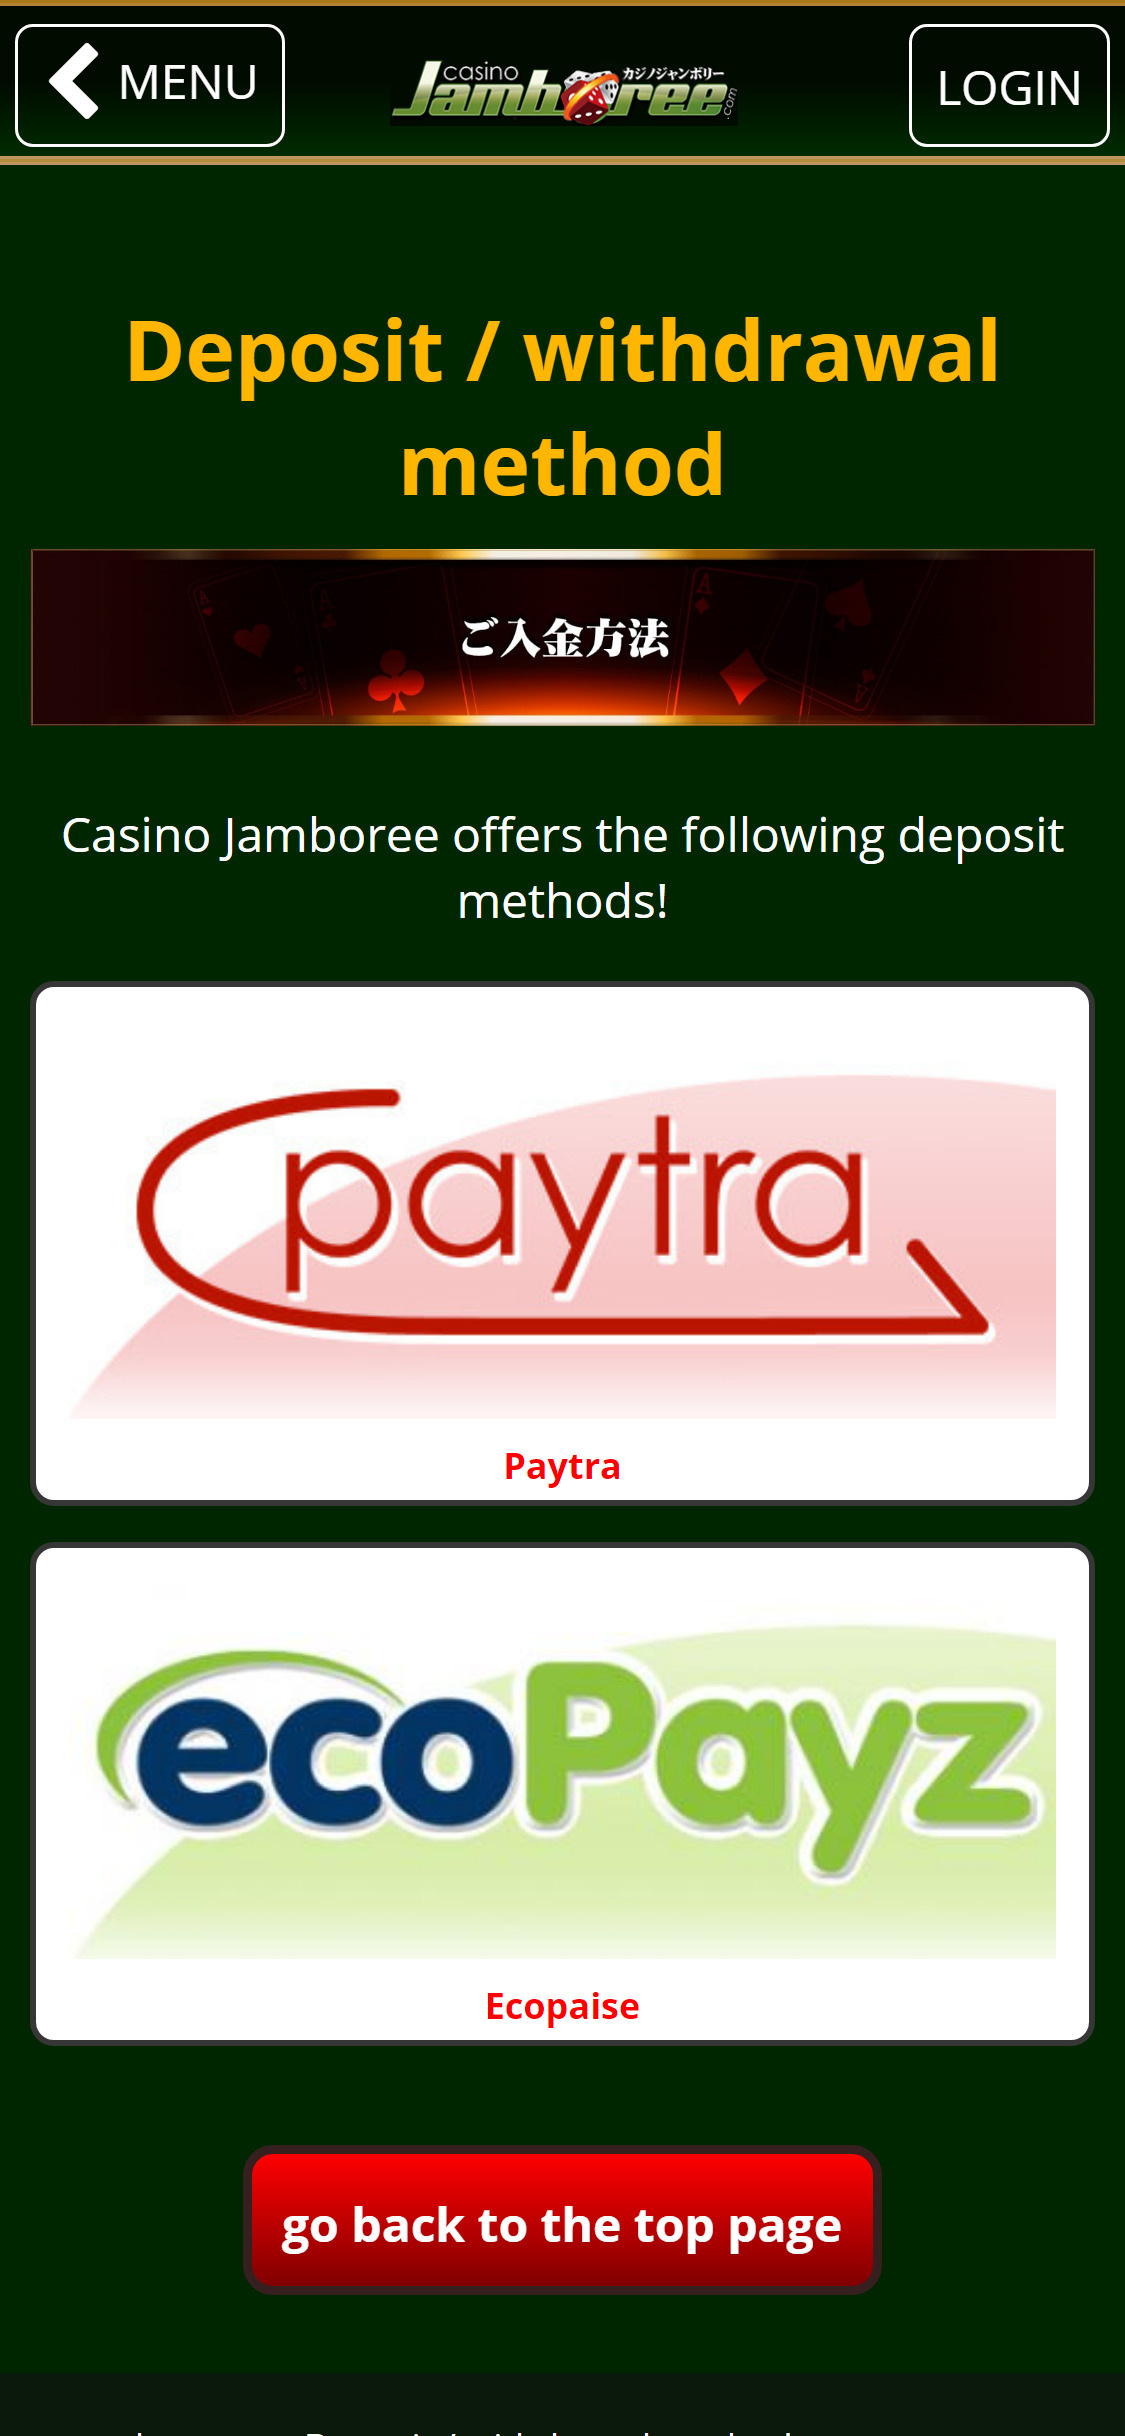 Casino Jamboree Mobile Payment Methods Review